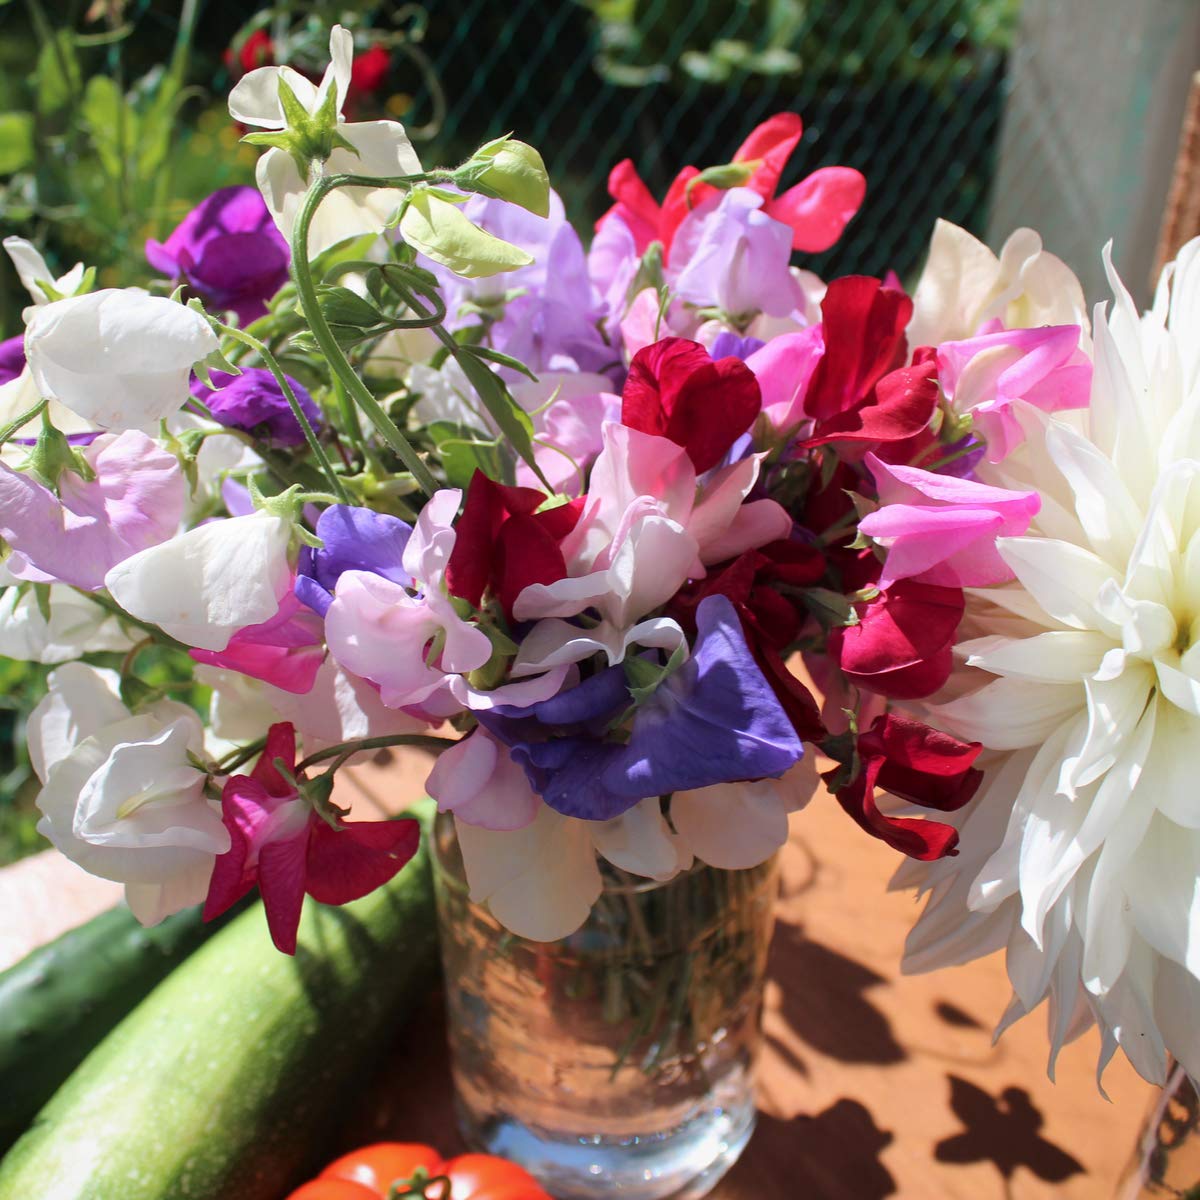 Flowering Plants - Sweet Pea 'Garden Mix' - 3 x Full Plants in 9cm Pots - AcquaGarden